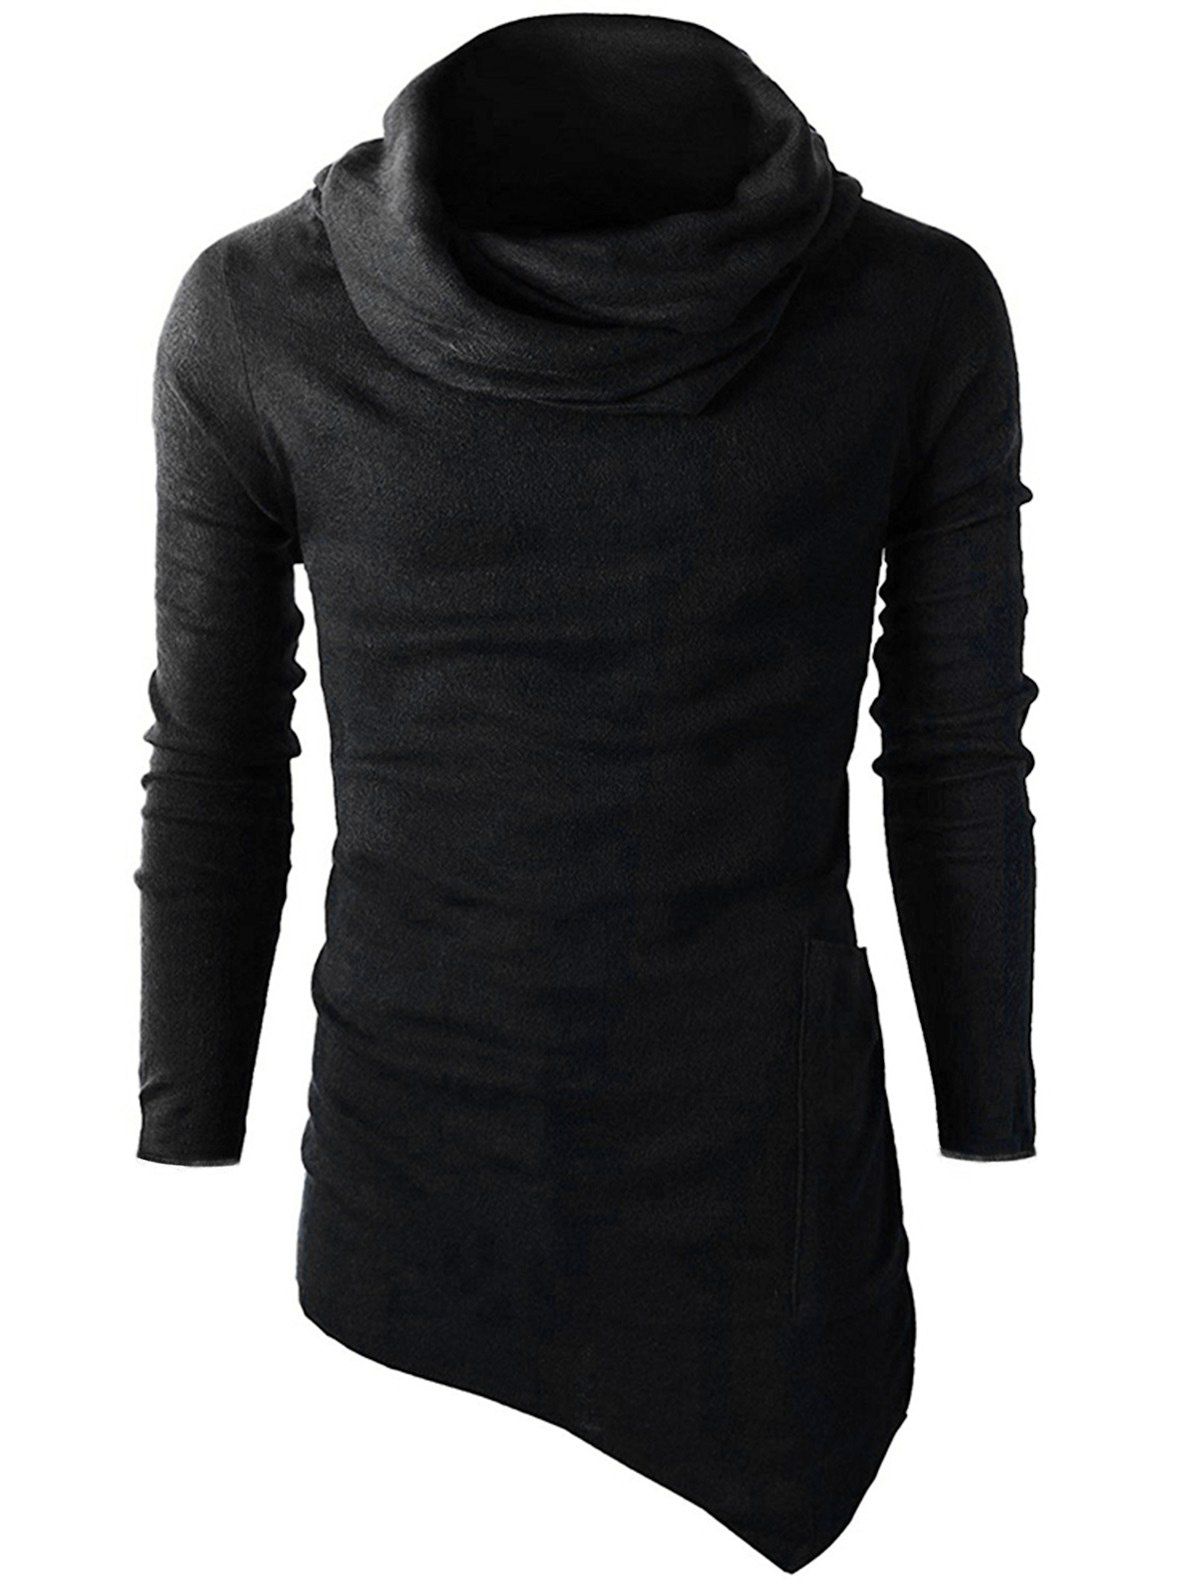 DressLily.com: Photo Gallery - One Pocket Cowl Neck Asymmetrical Sweater